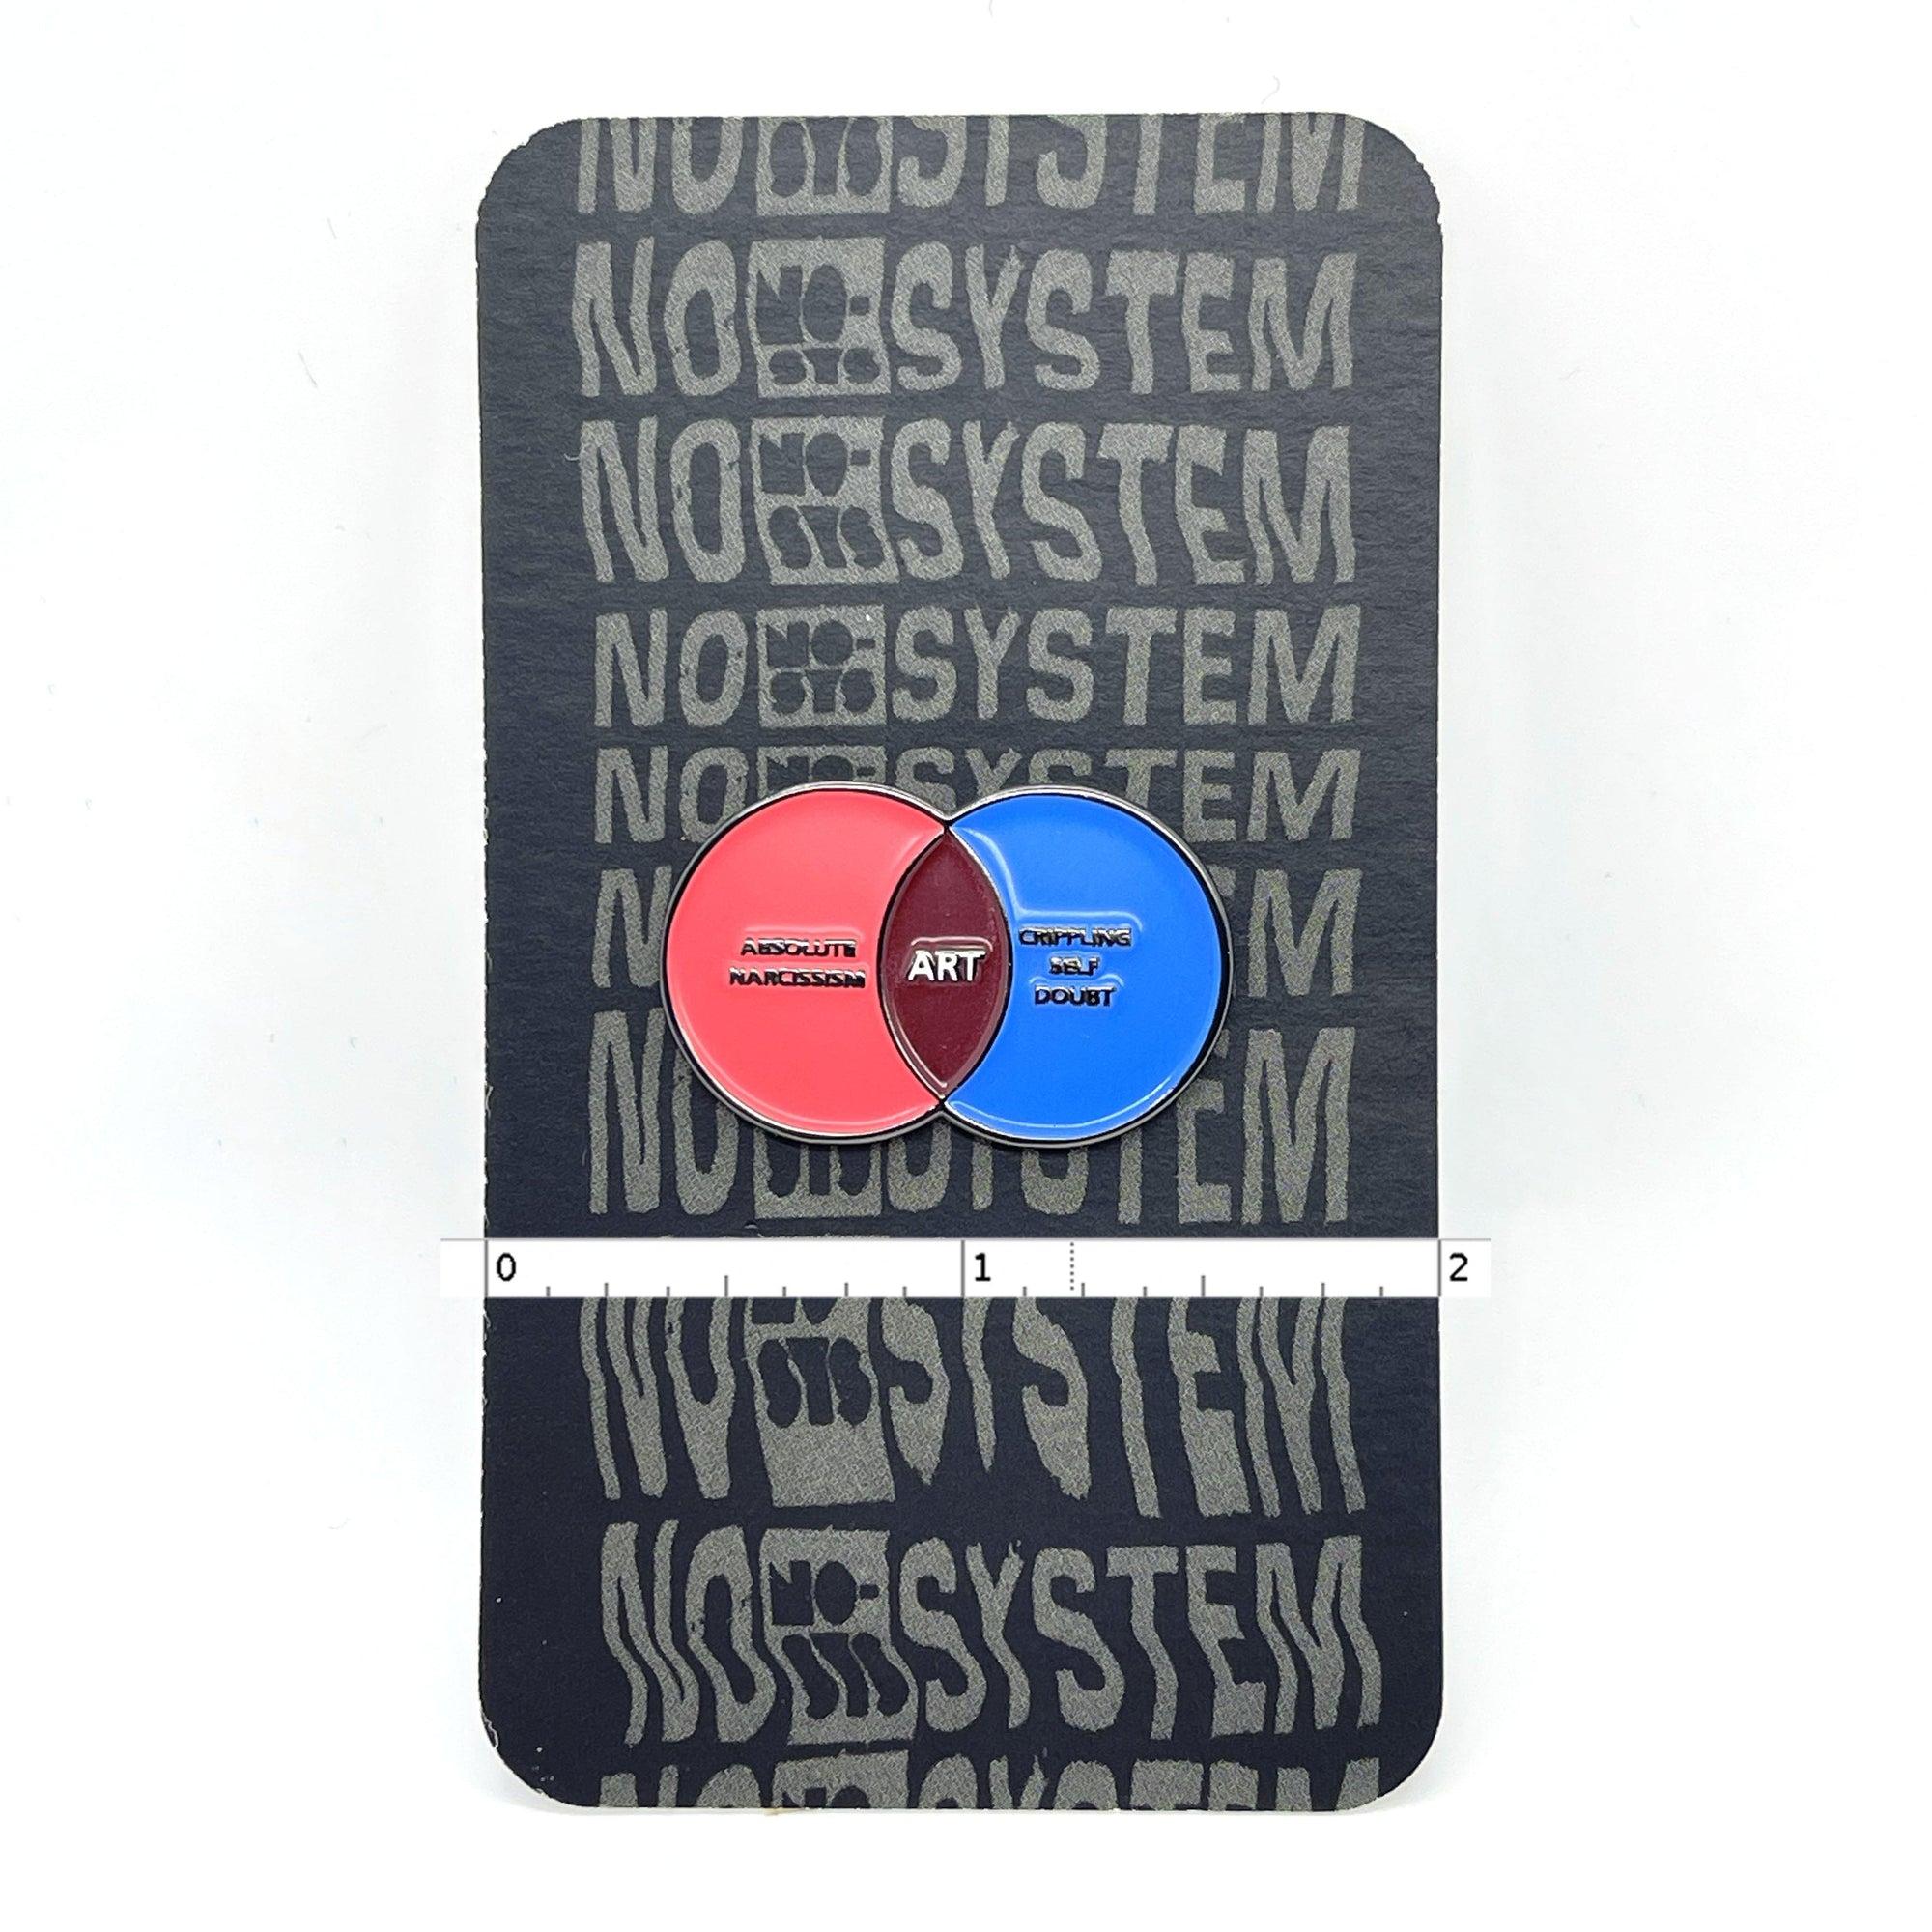 Art Venn diagram - No System